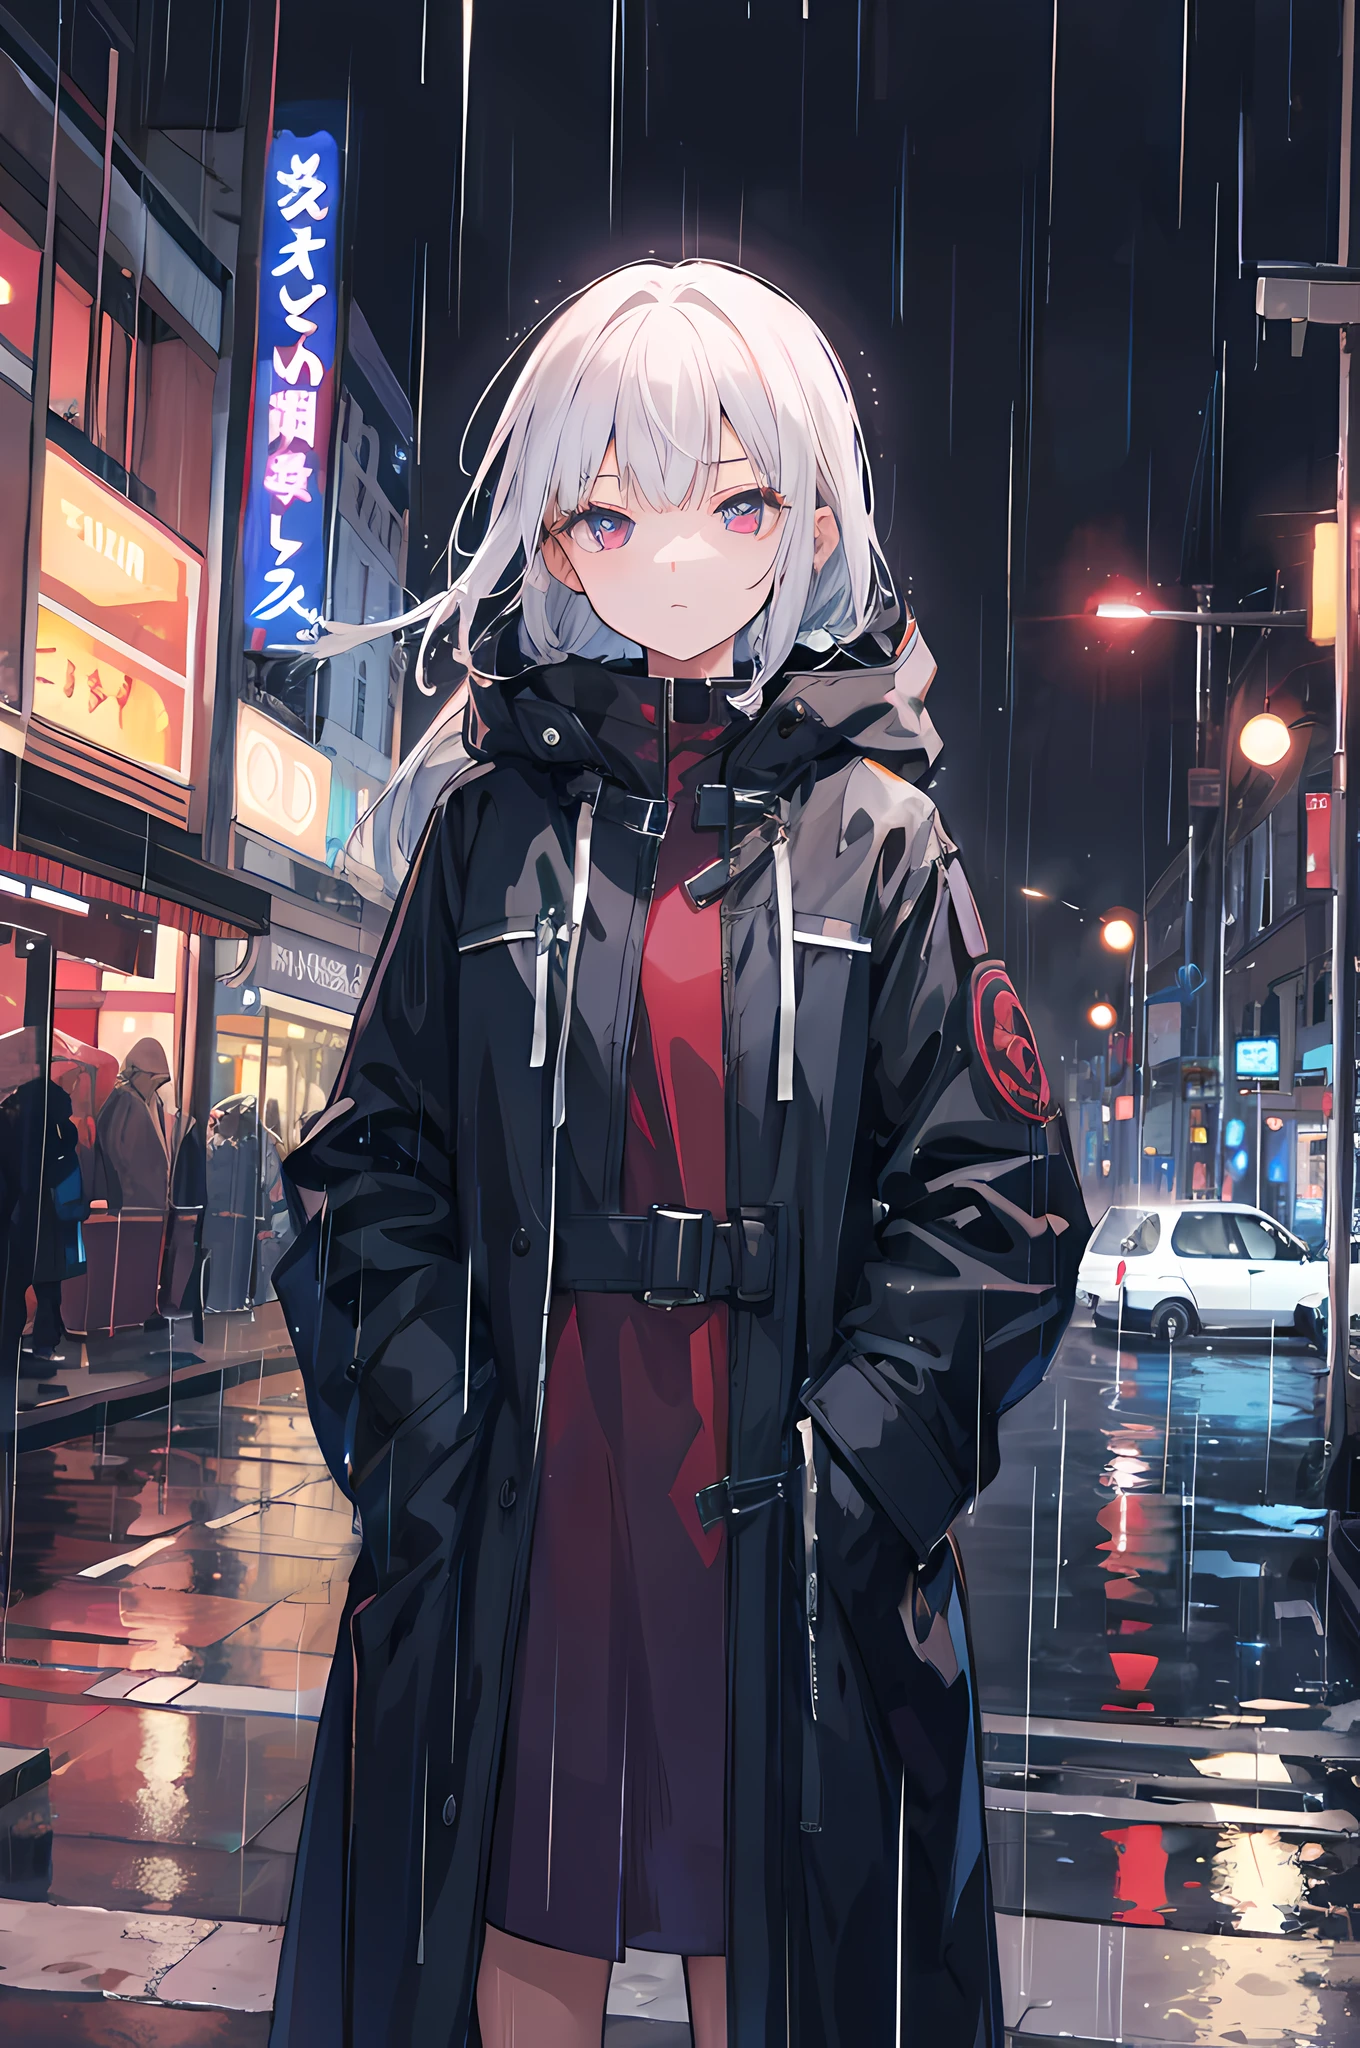 1 girl, night city, rain, coat, hands in pockets